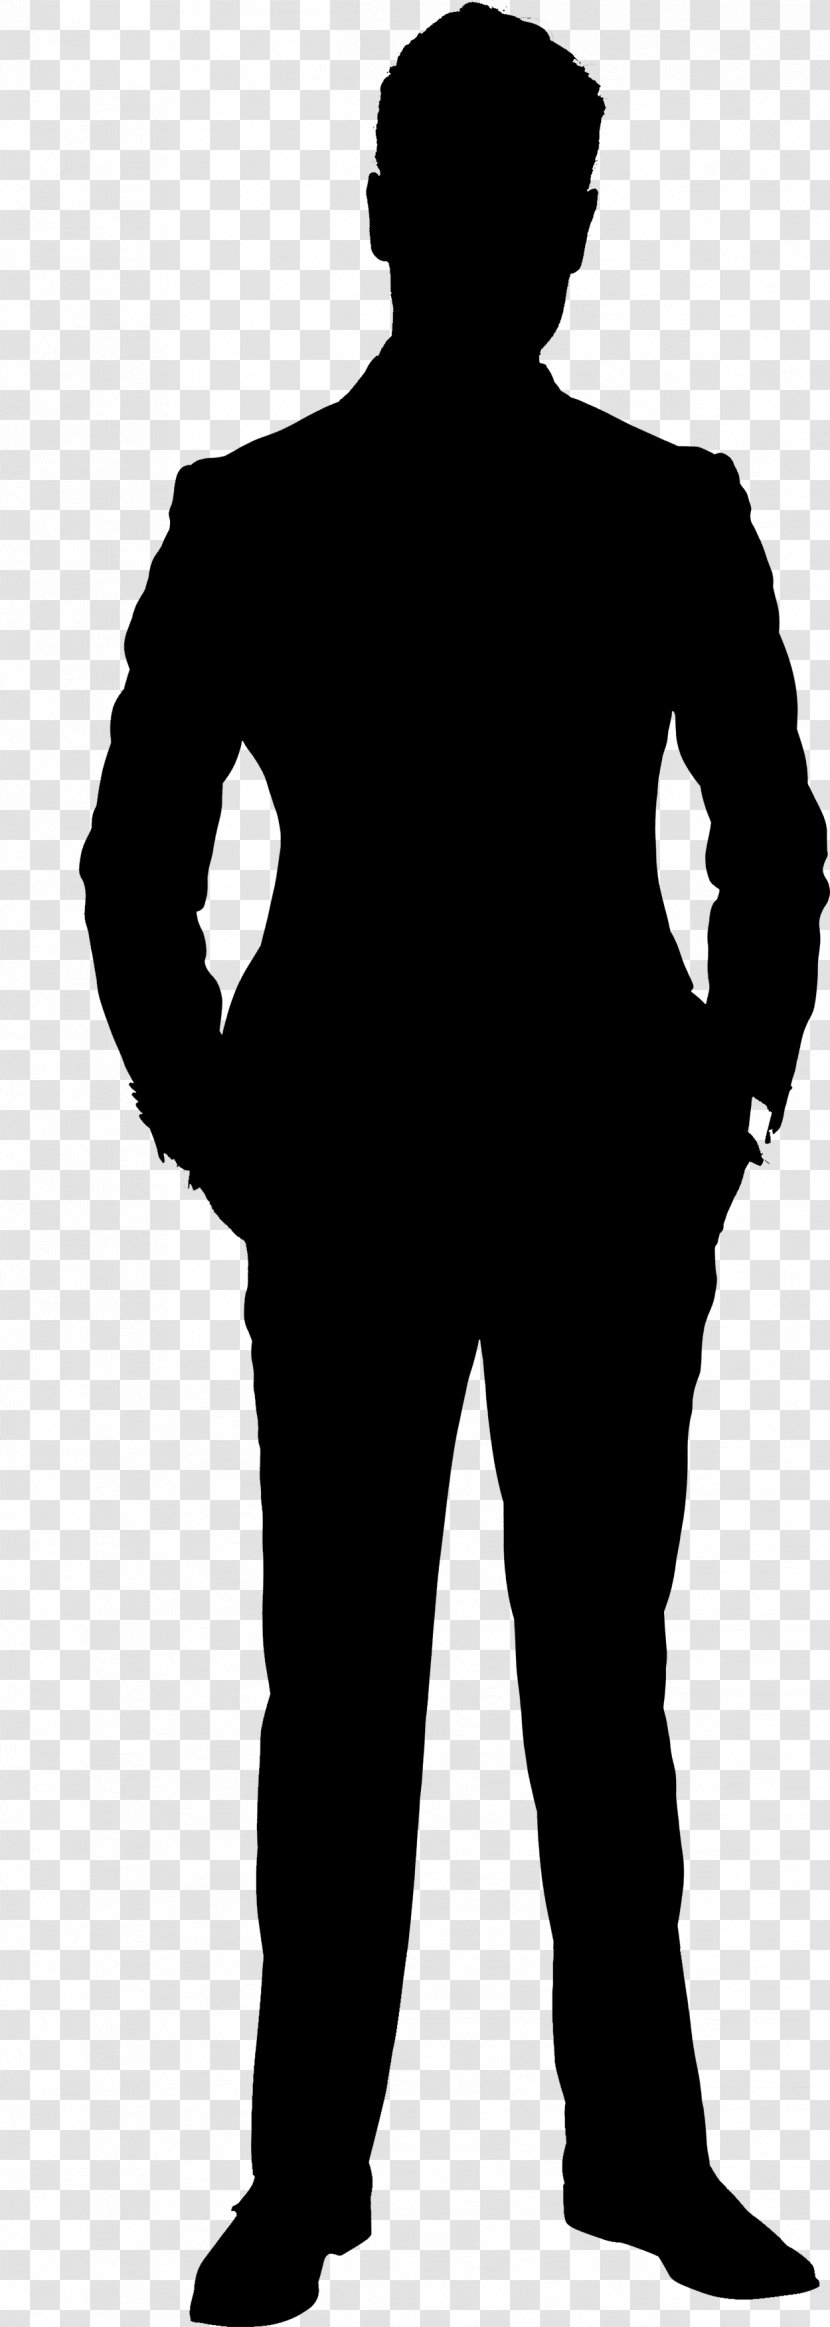 Man Silhouette Suit Image - Formal Wear Transparent PNG